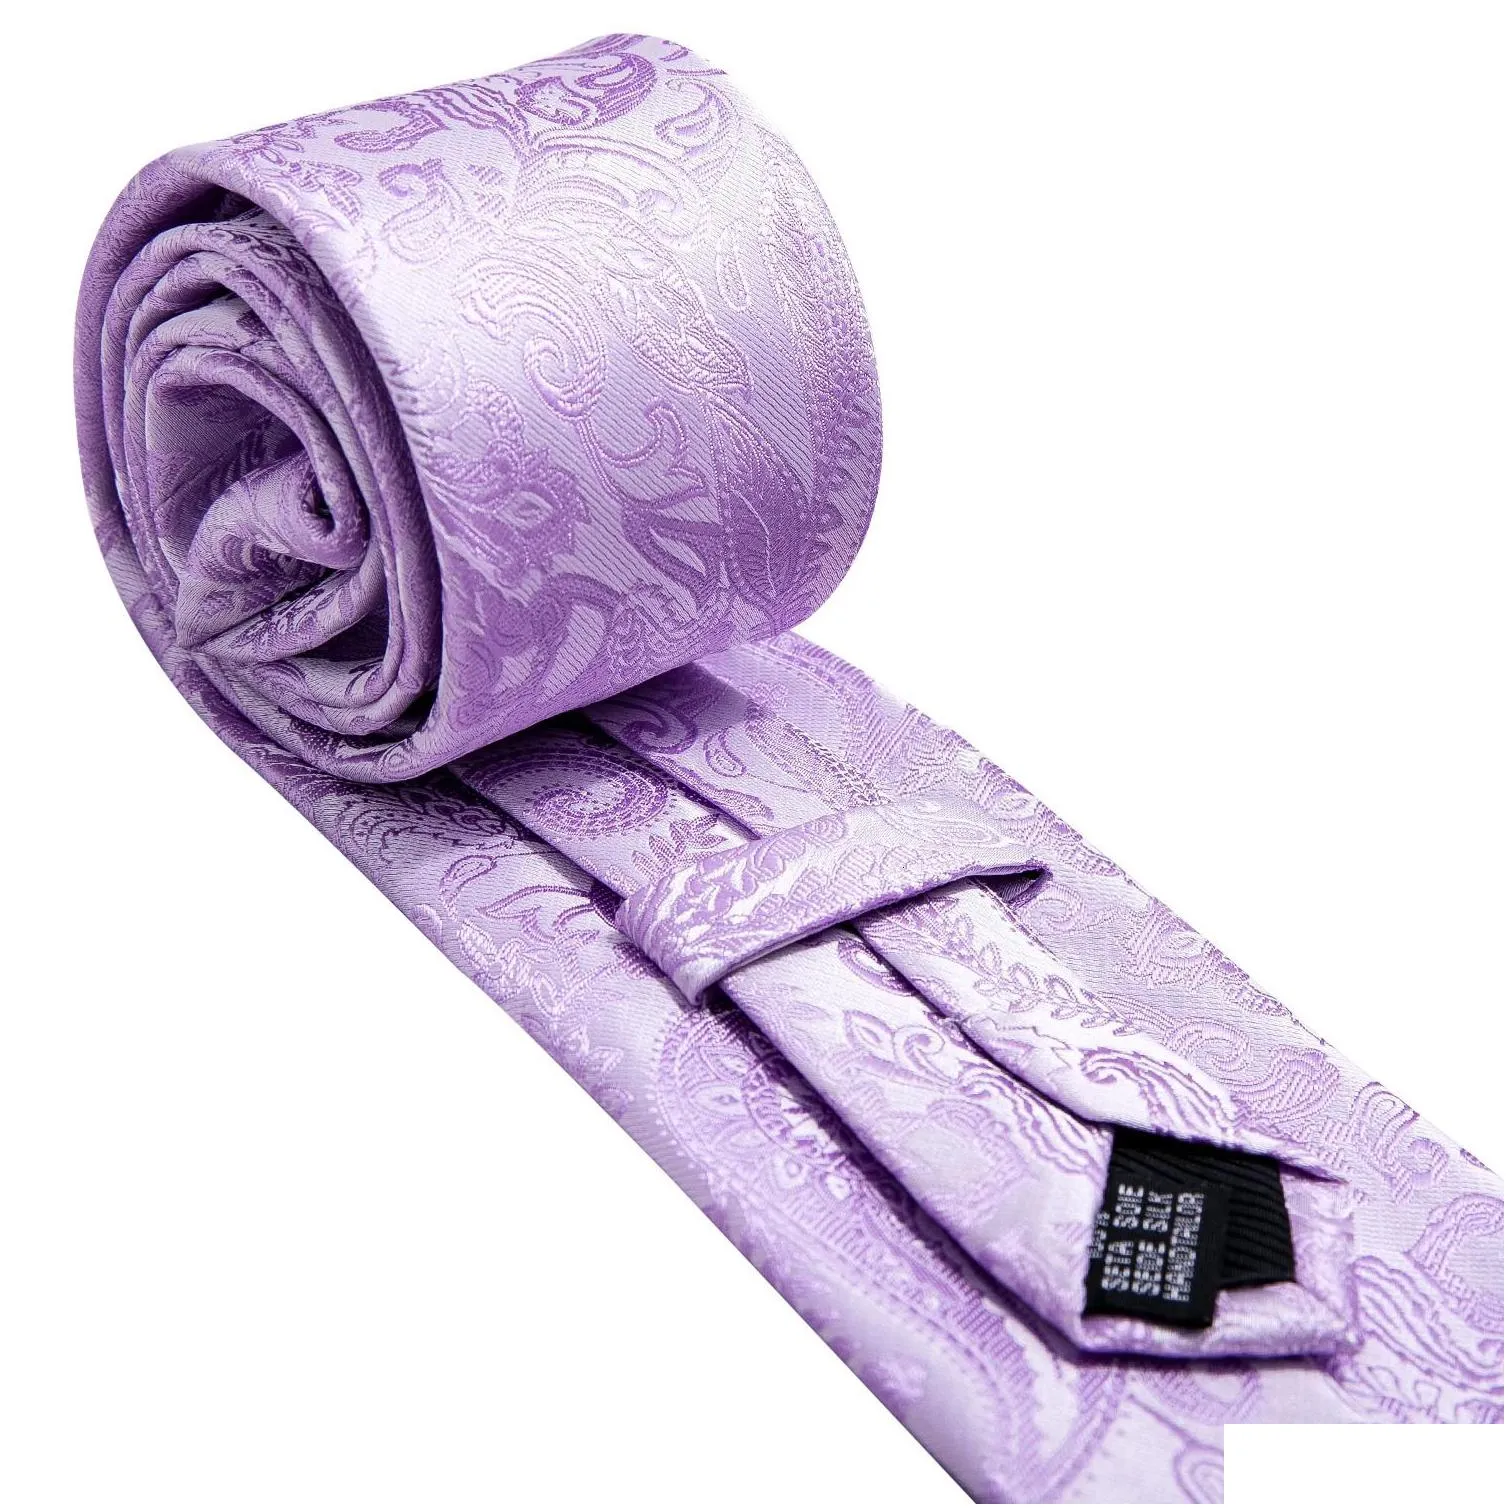 Neck Ties Neck Ties Male Gift Silk Men Tie Set Purple Violet Solid Paisley Striped Wedding Business For Man Necktie Handky Cufflinks B Dh5Nz